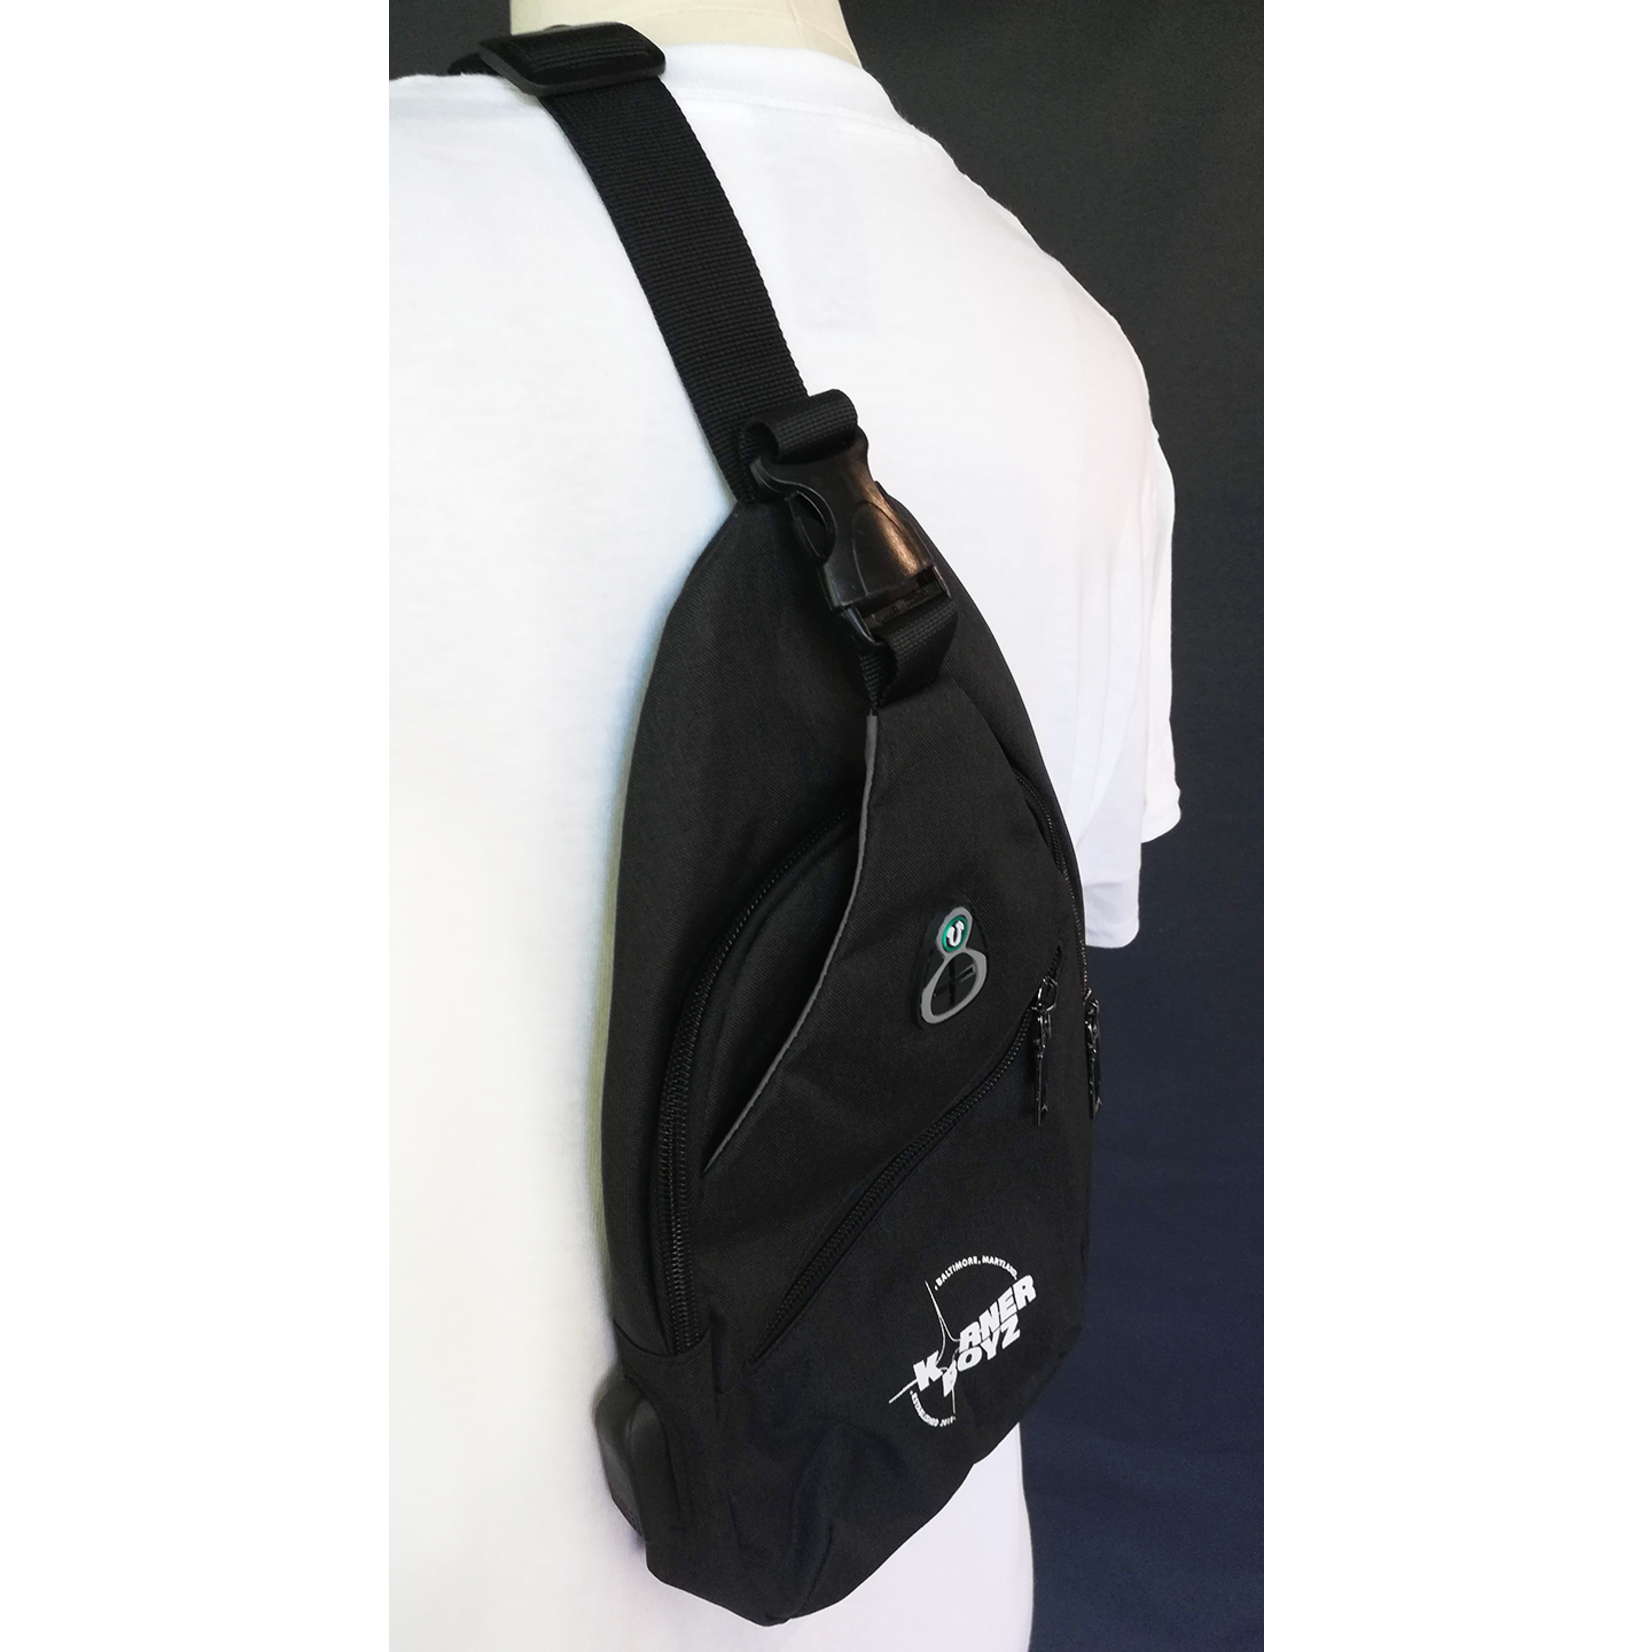 Korner Boyz KBZ Sports Sling Bag with USB Charging Port